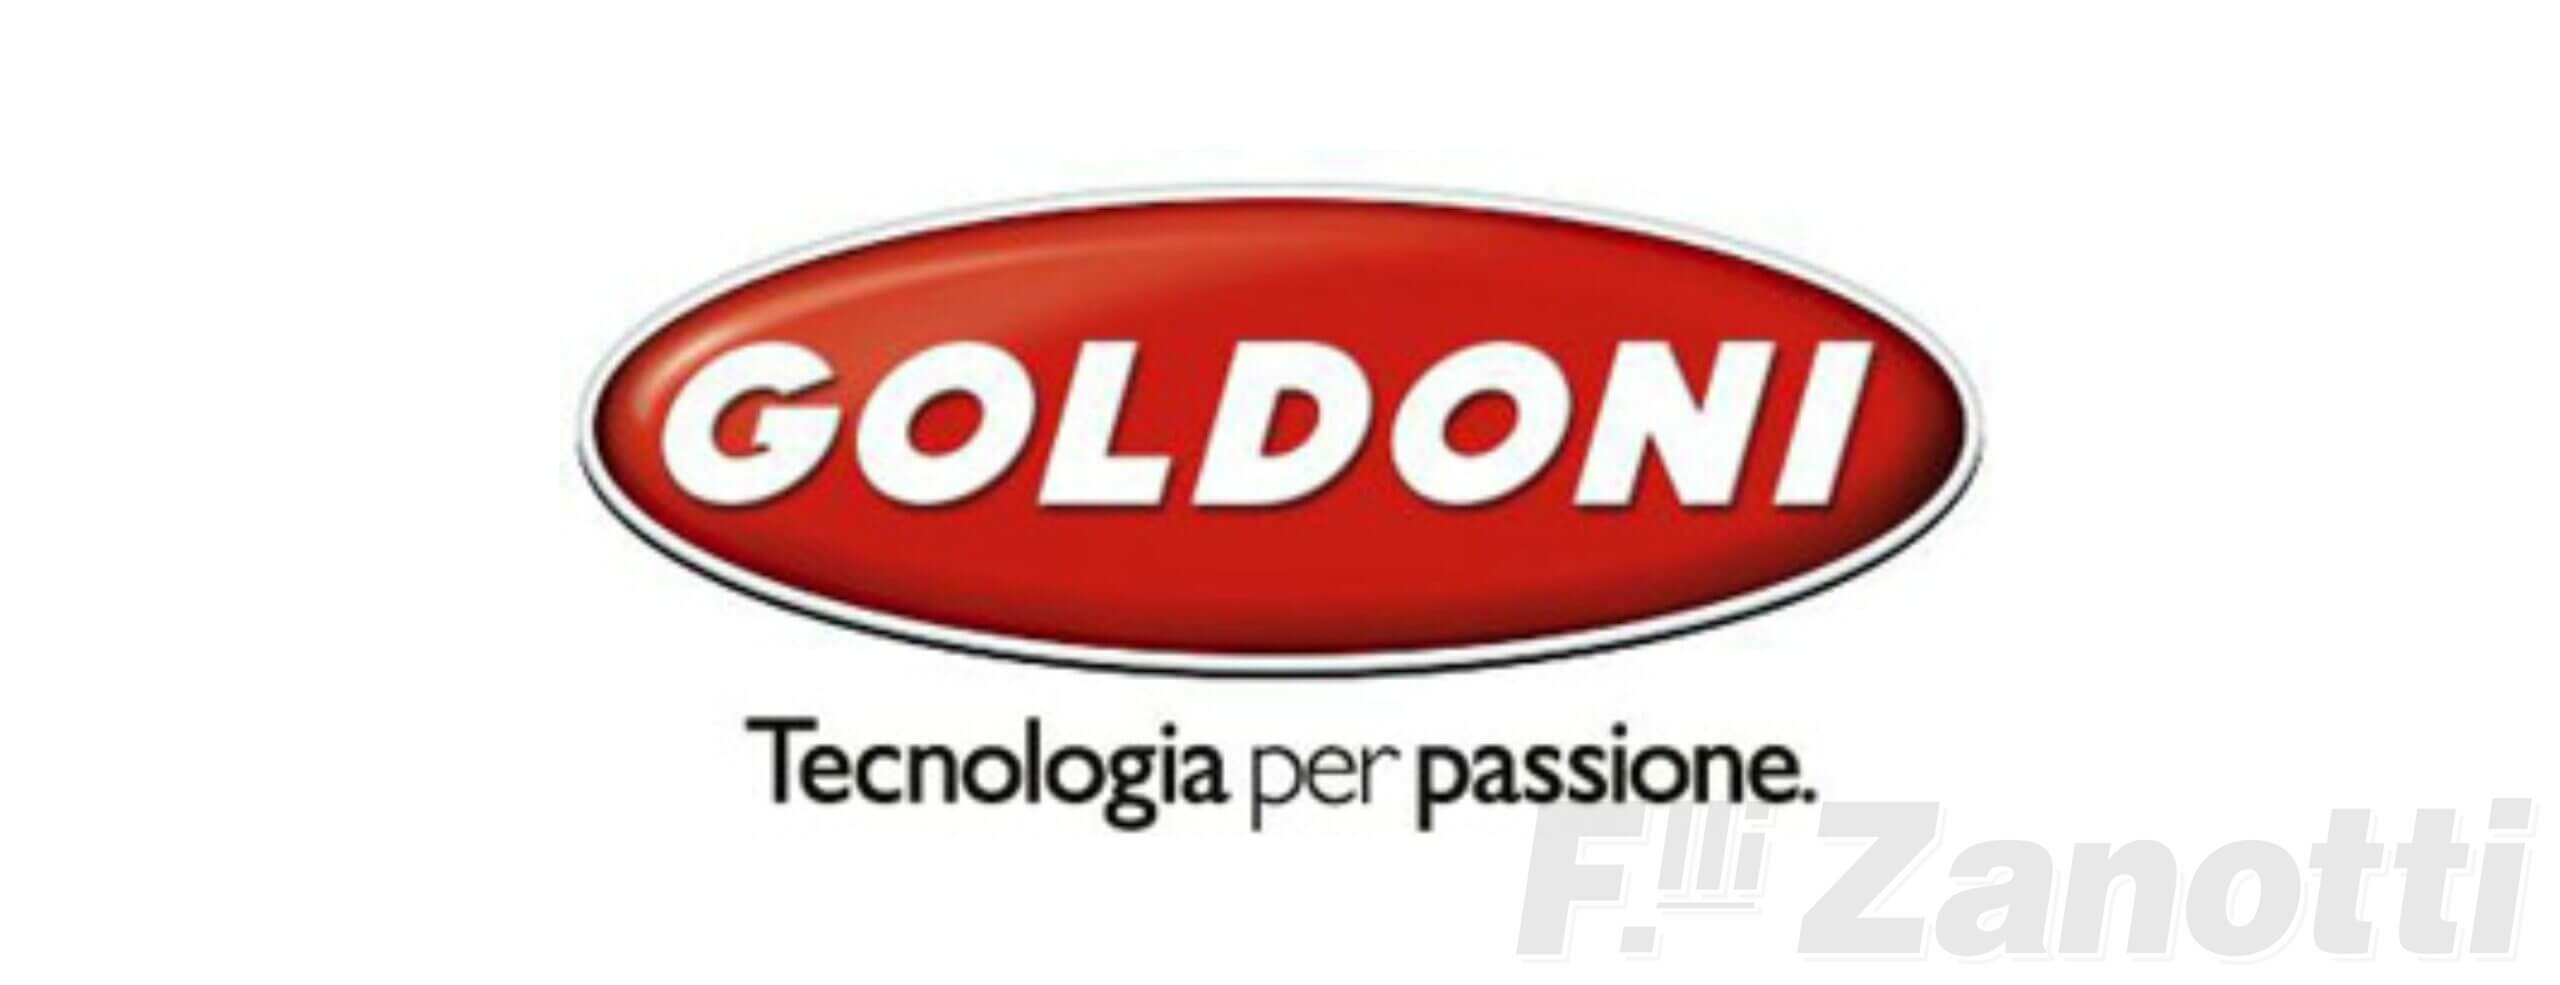 goldoni-scaled-1.jpg